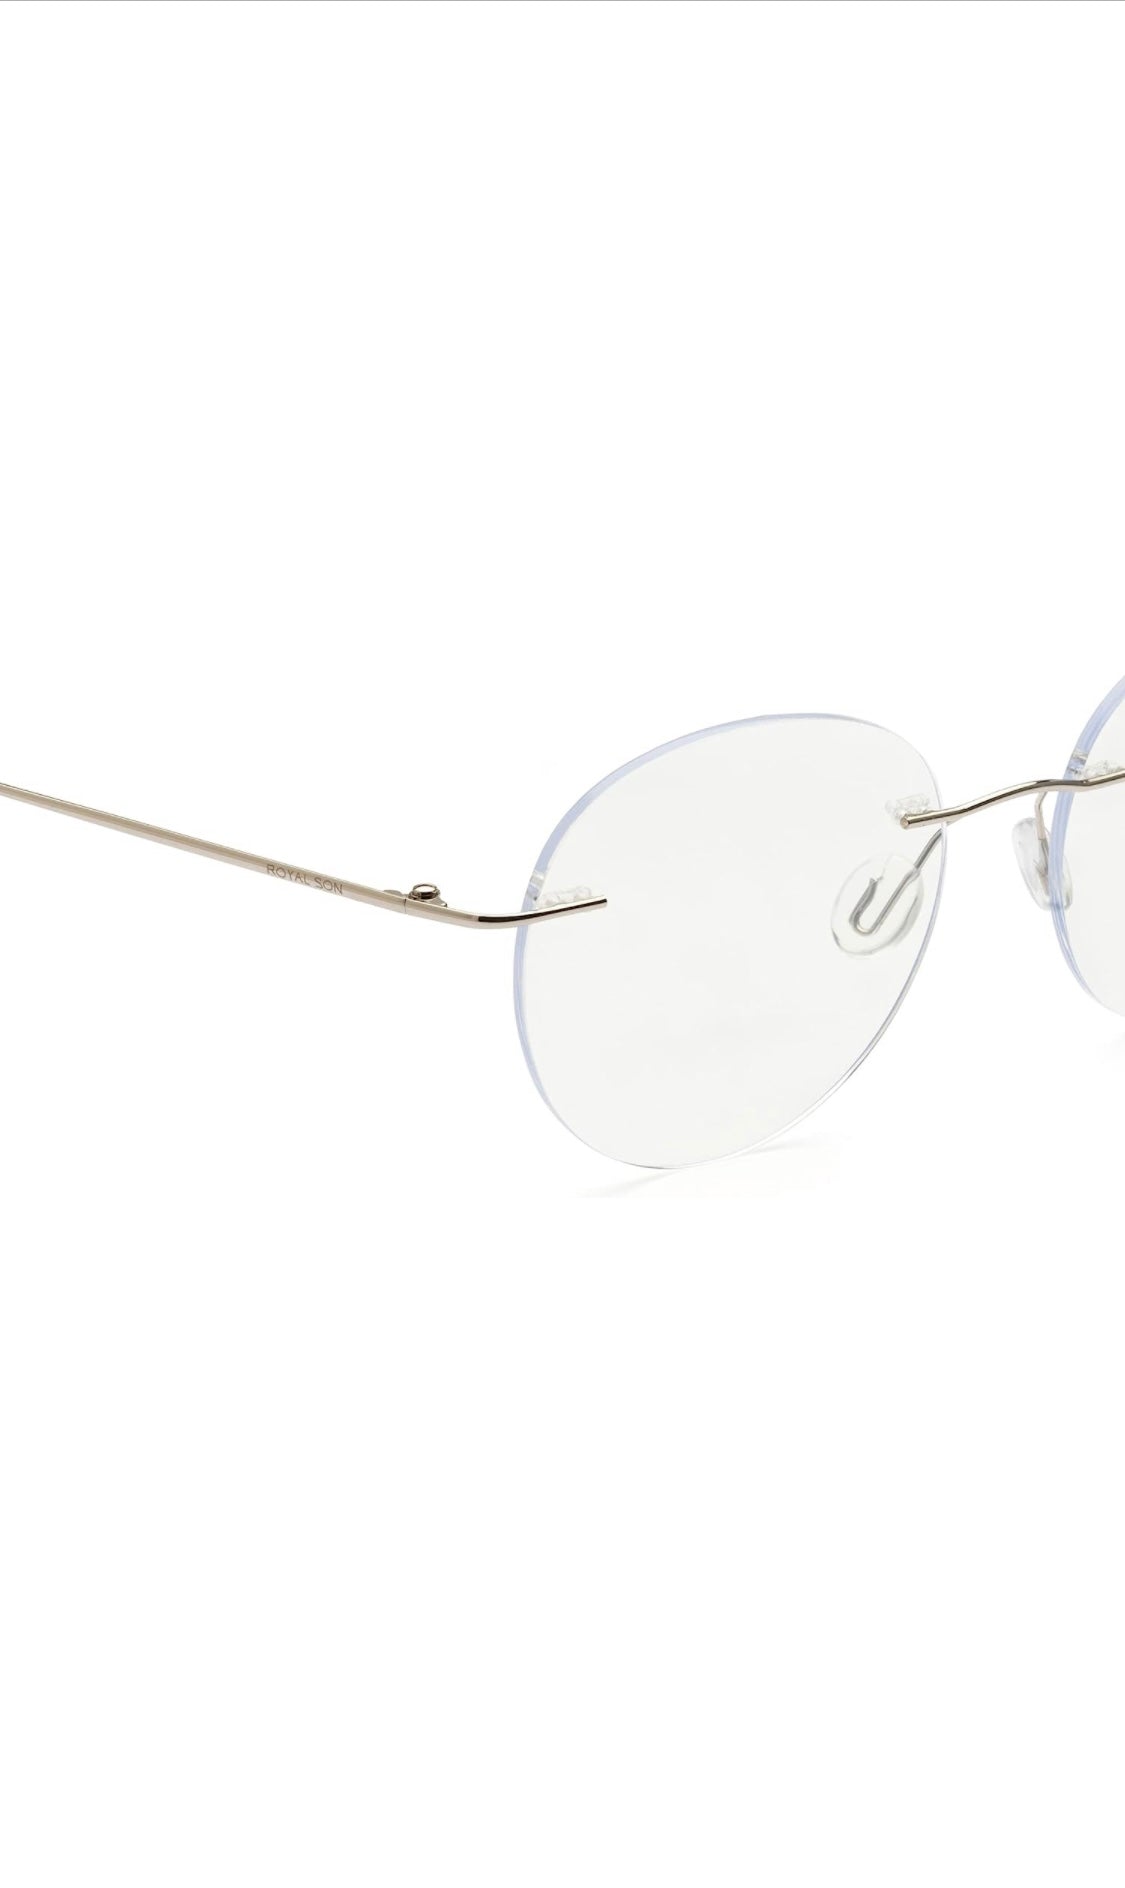 Jodykoes® Rimless Round Frame Zero Power Anti Glare Spectacle For Men and Women | Unisex Computer Eyeglasses Light Weight Round Frameless Eyewear (Silver) - Jodykoes ®